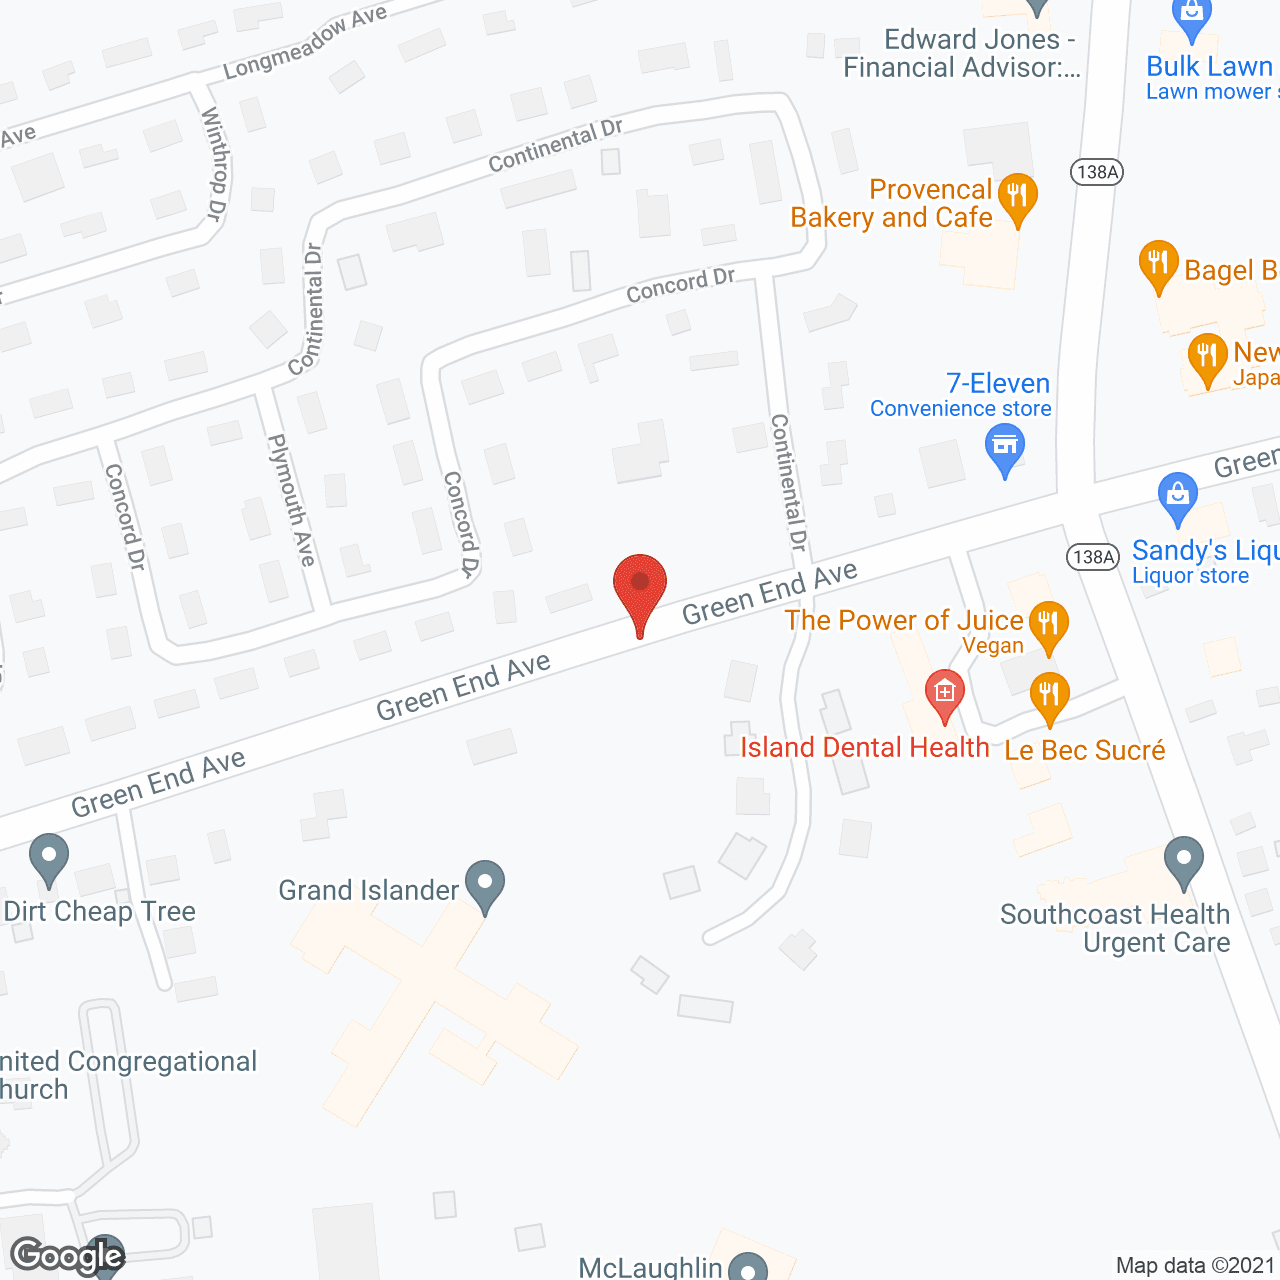 Grand Islander Center in google map